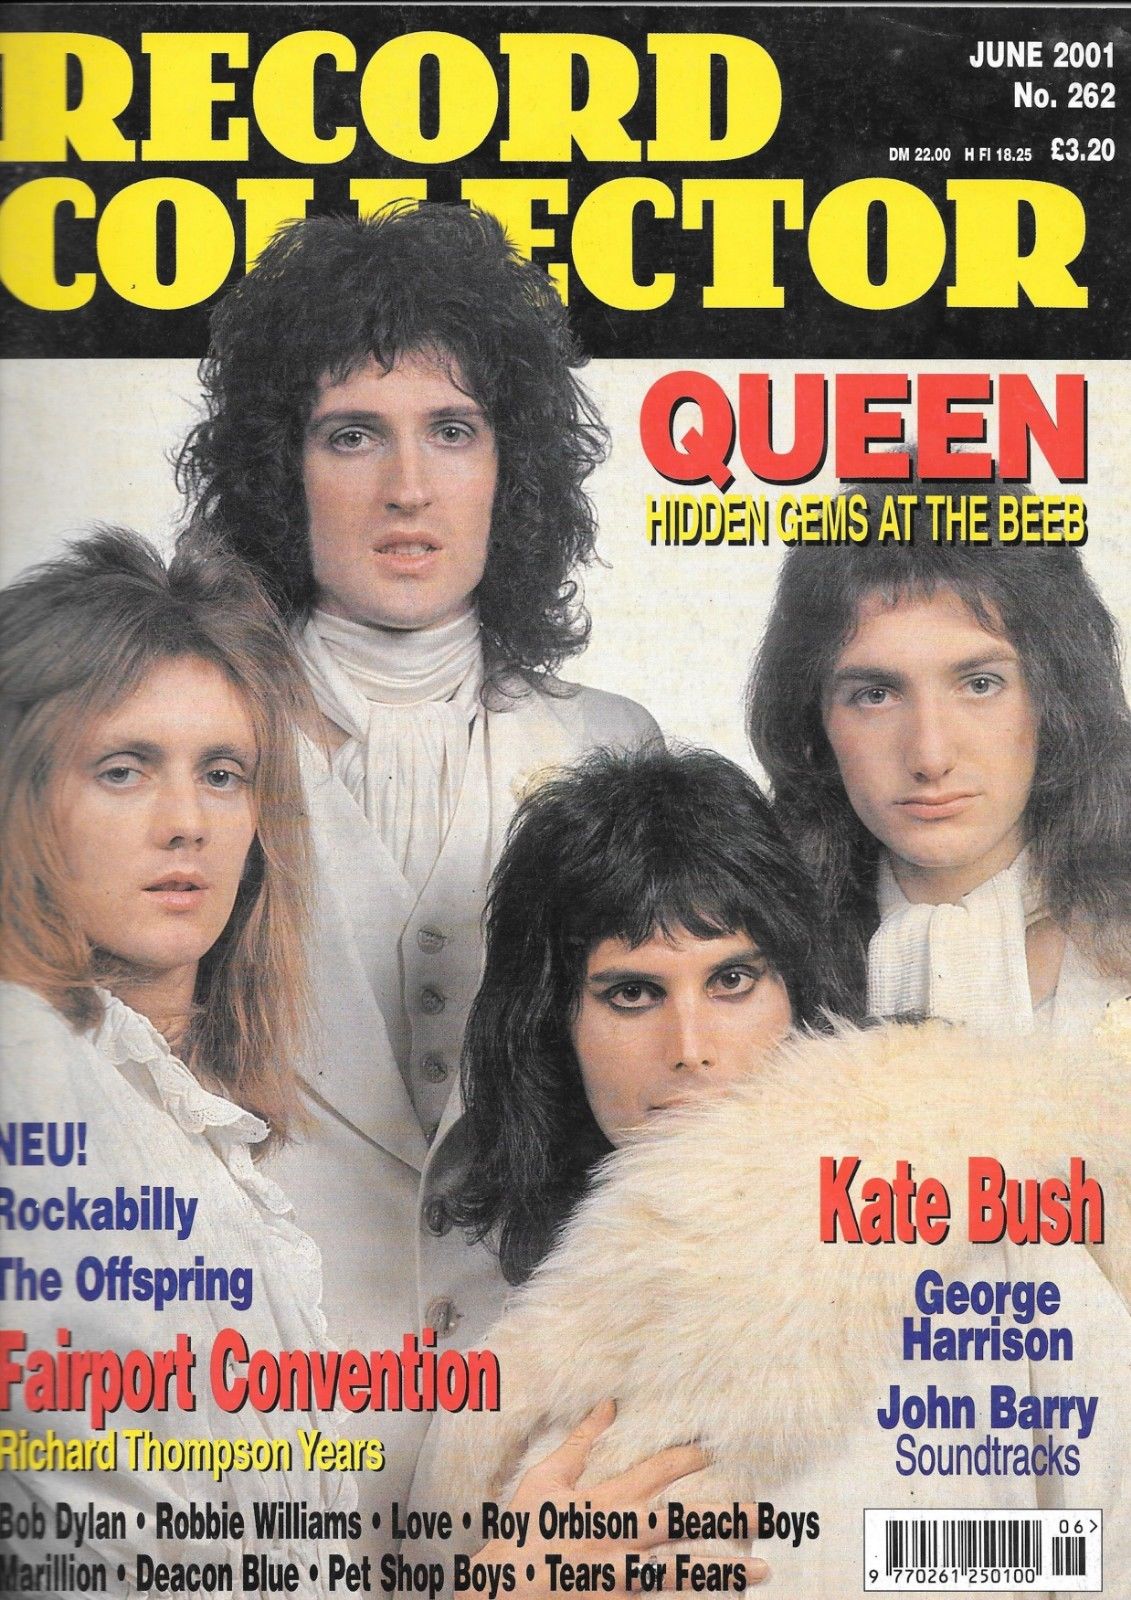 Record Collector Magazine June 2001: FREDDIE MERCURY - Queen - Kate Bush George Harrison